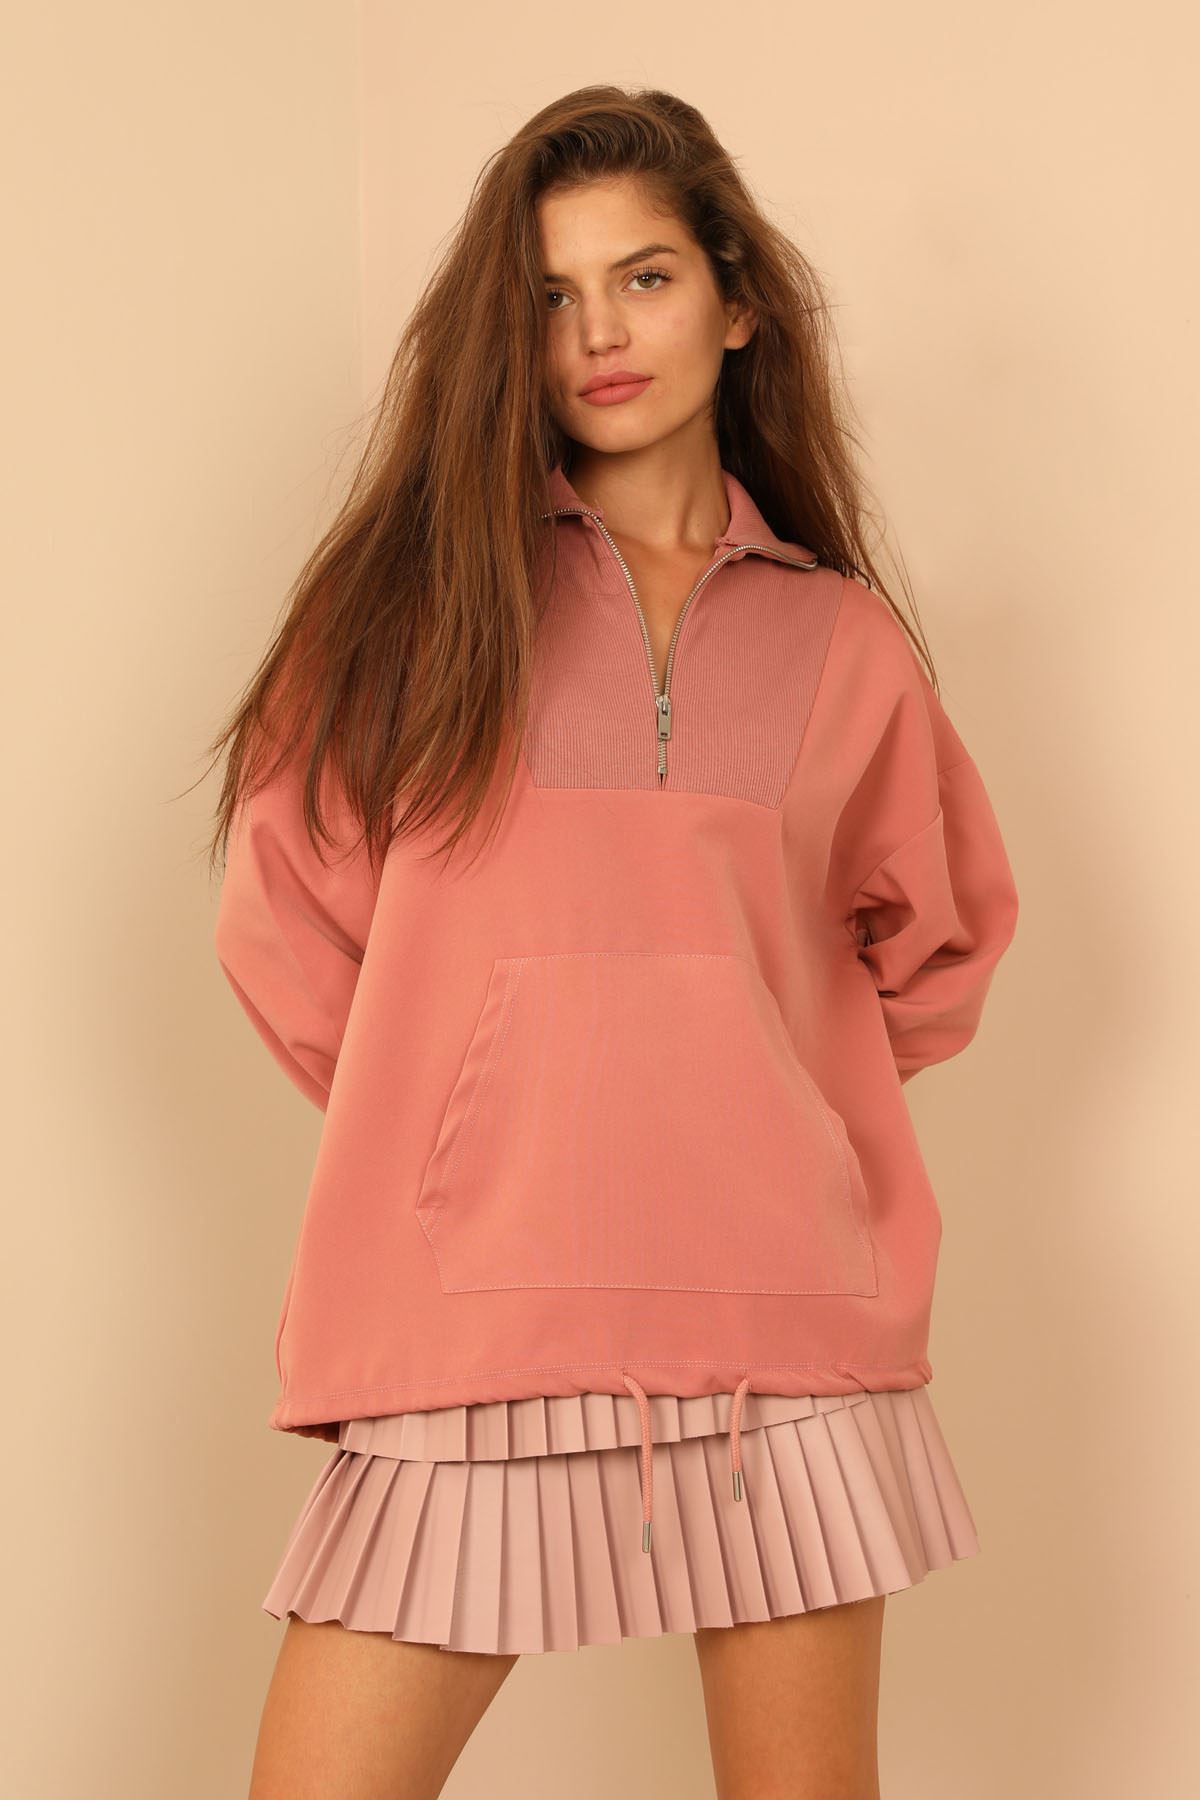 Atlas Fabric Zip Neck Hip Height Kangaroo Pocket Women Sweatshirt - Light Pink